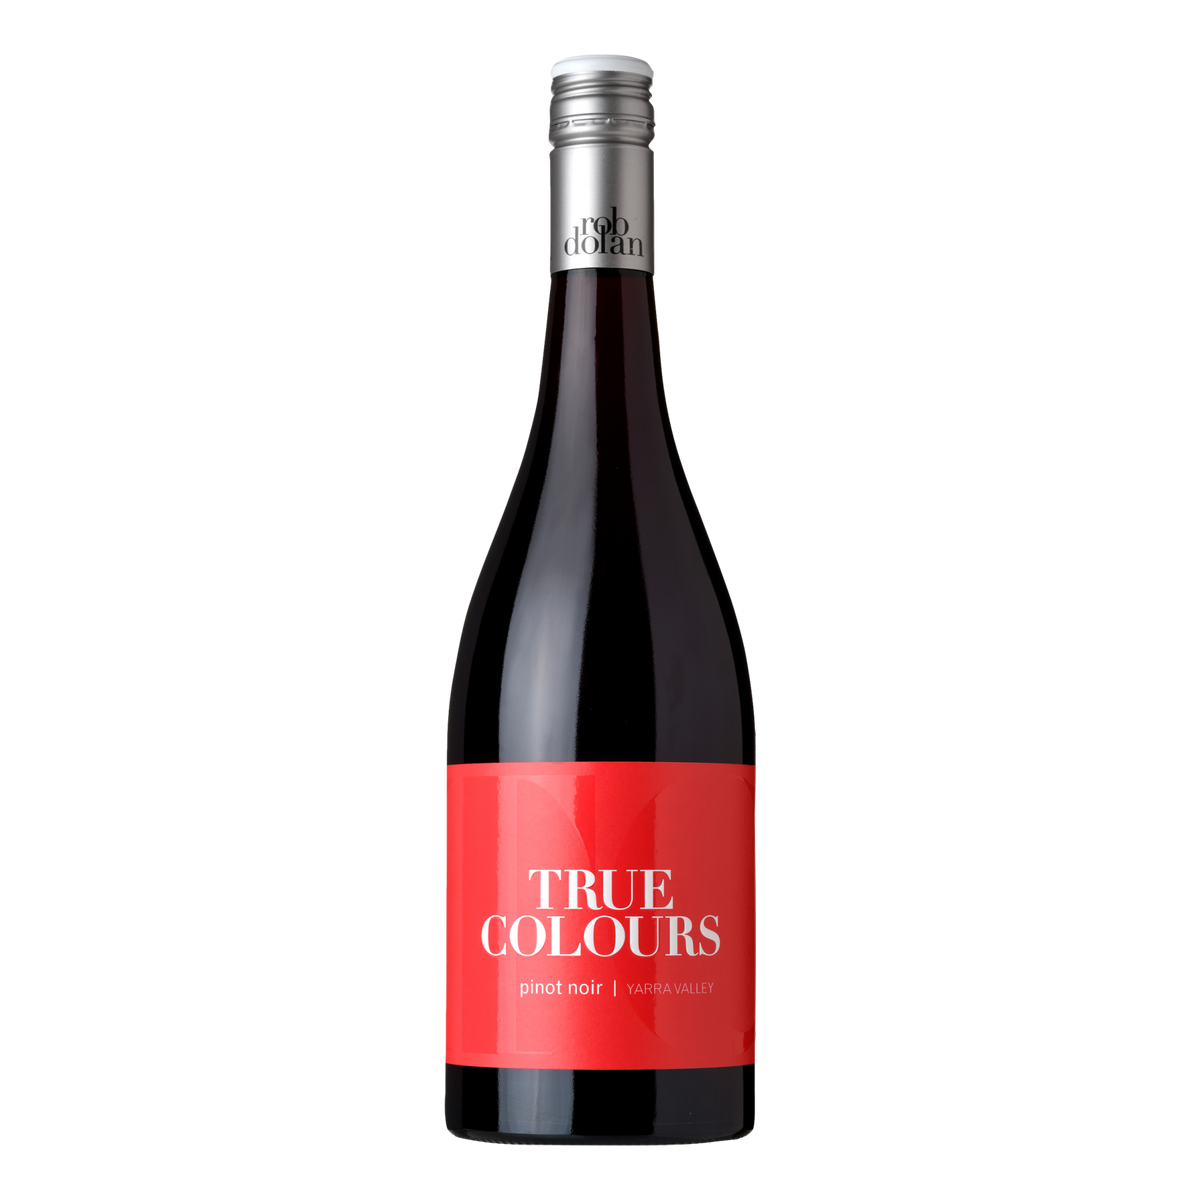 Rob Dolan True Colours Pinot Noir